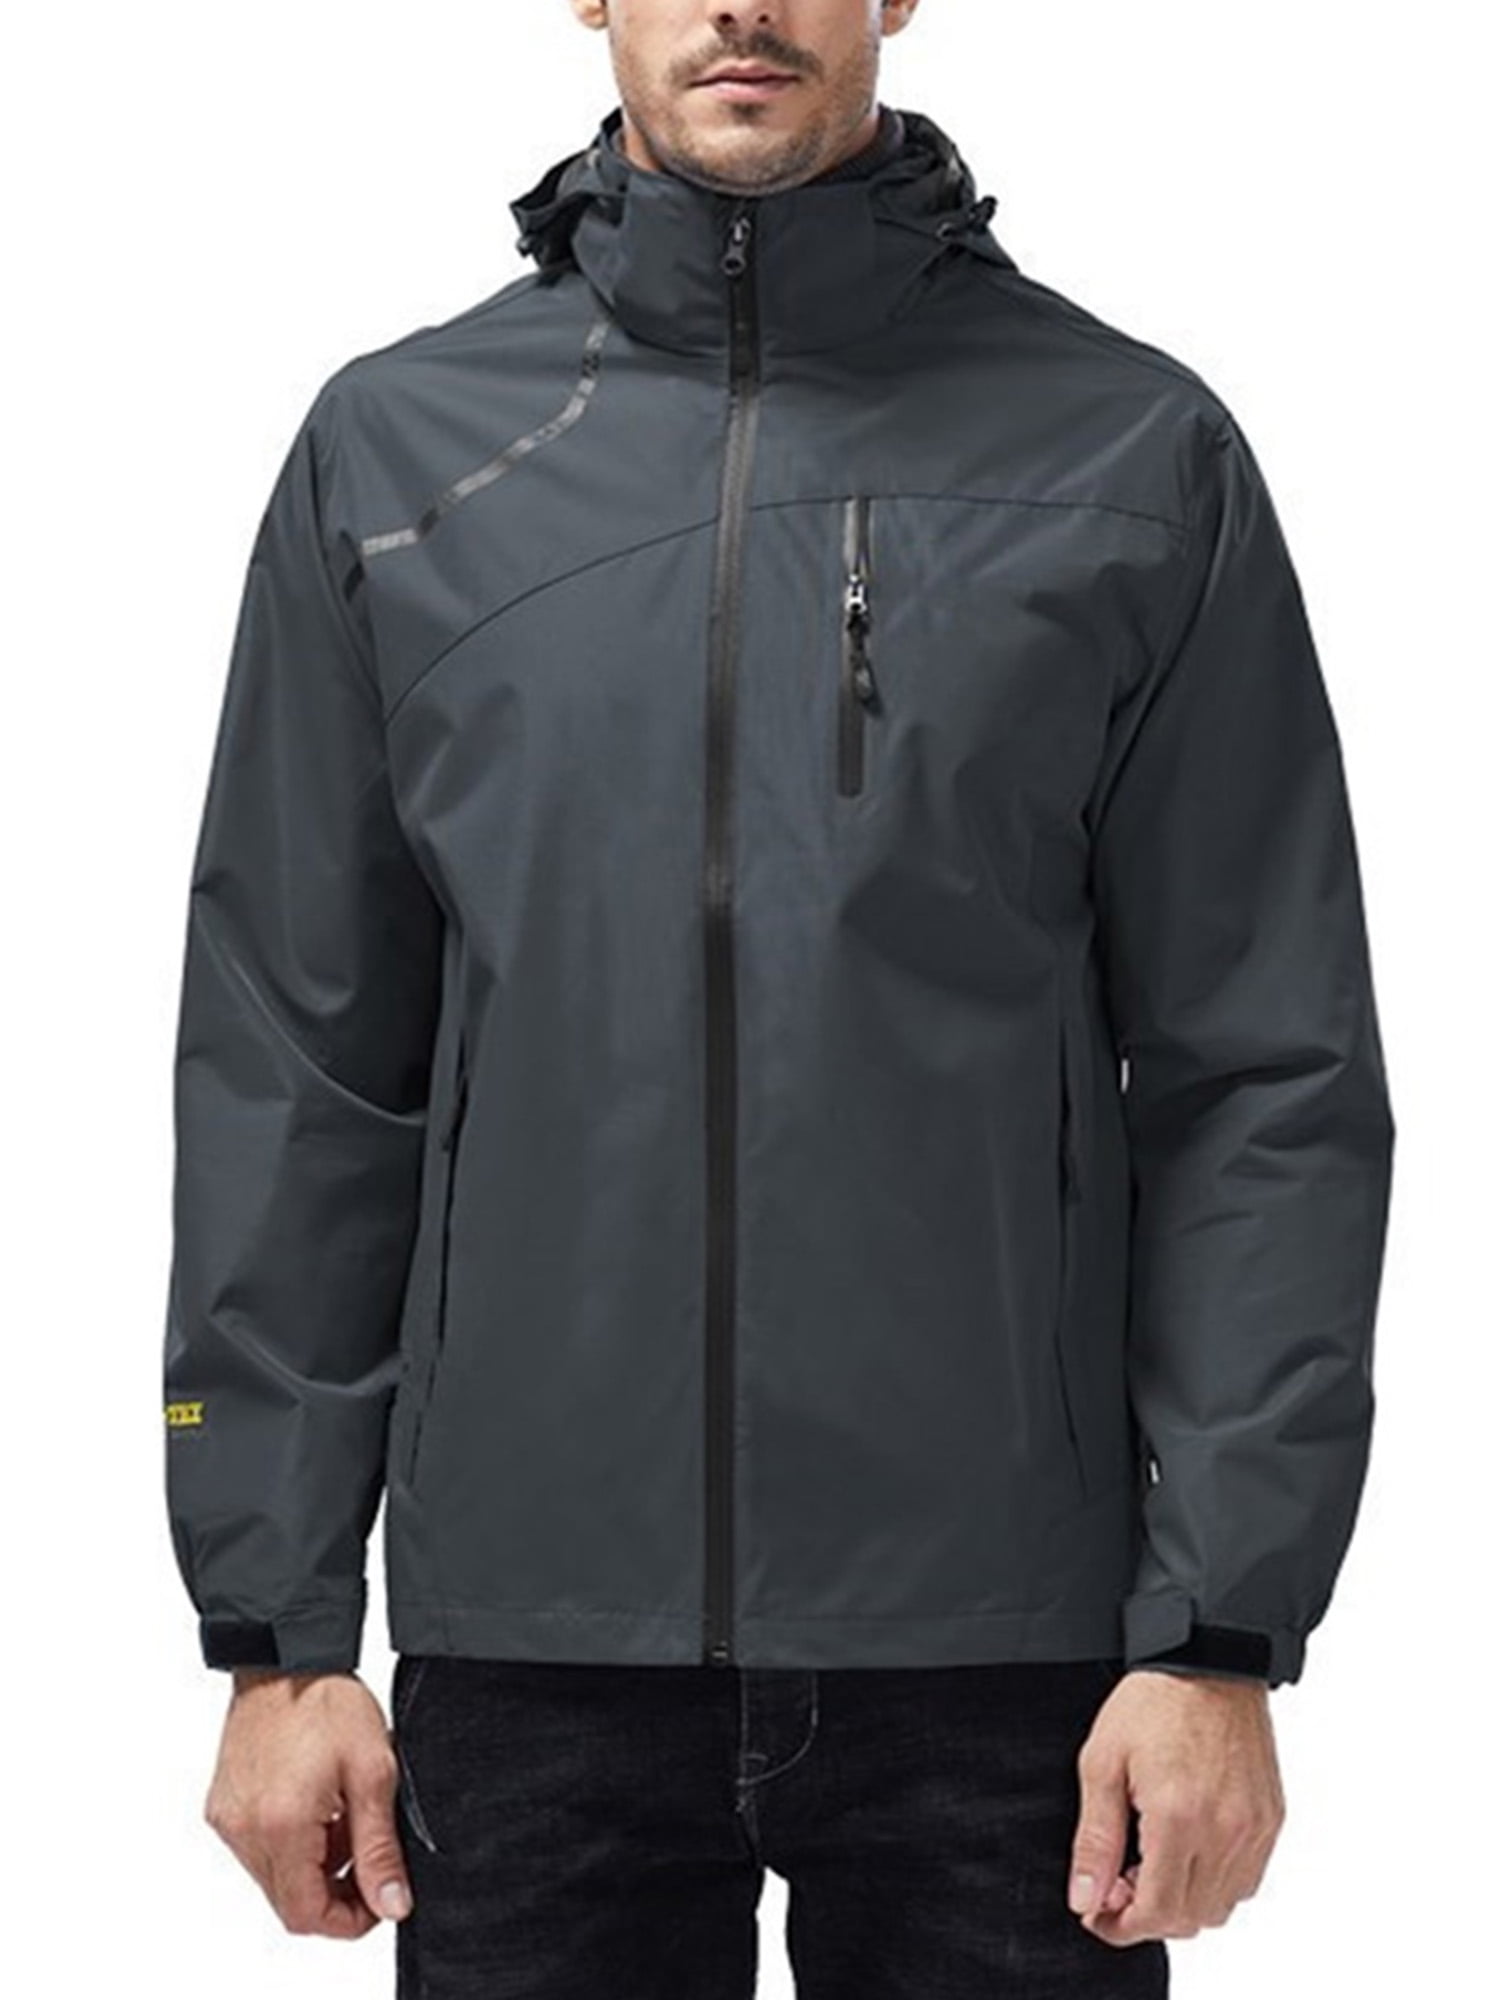 CAMEL CROWN Mens Softshell Fleece Lined Waterproof Windproof Jacket Full Zip Lightweight Athletic Outdoor Hiking Jacket Coat 